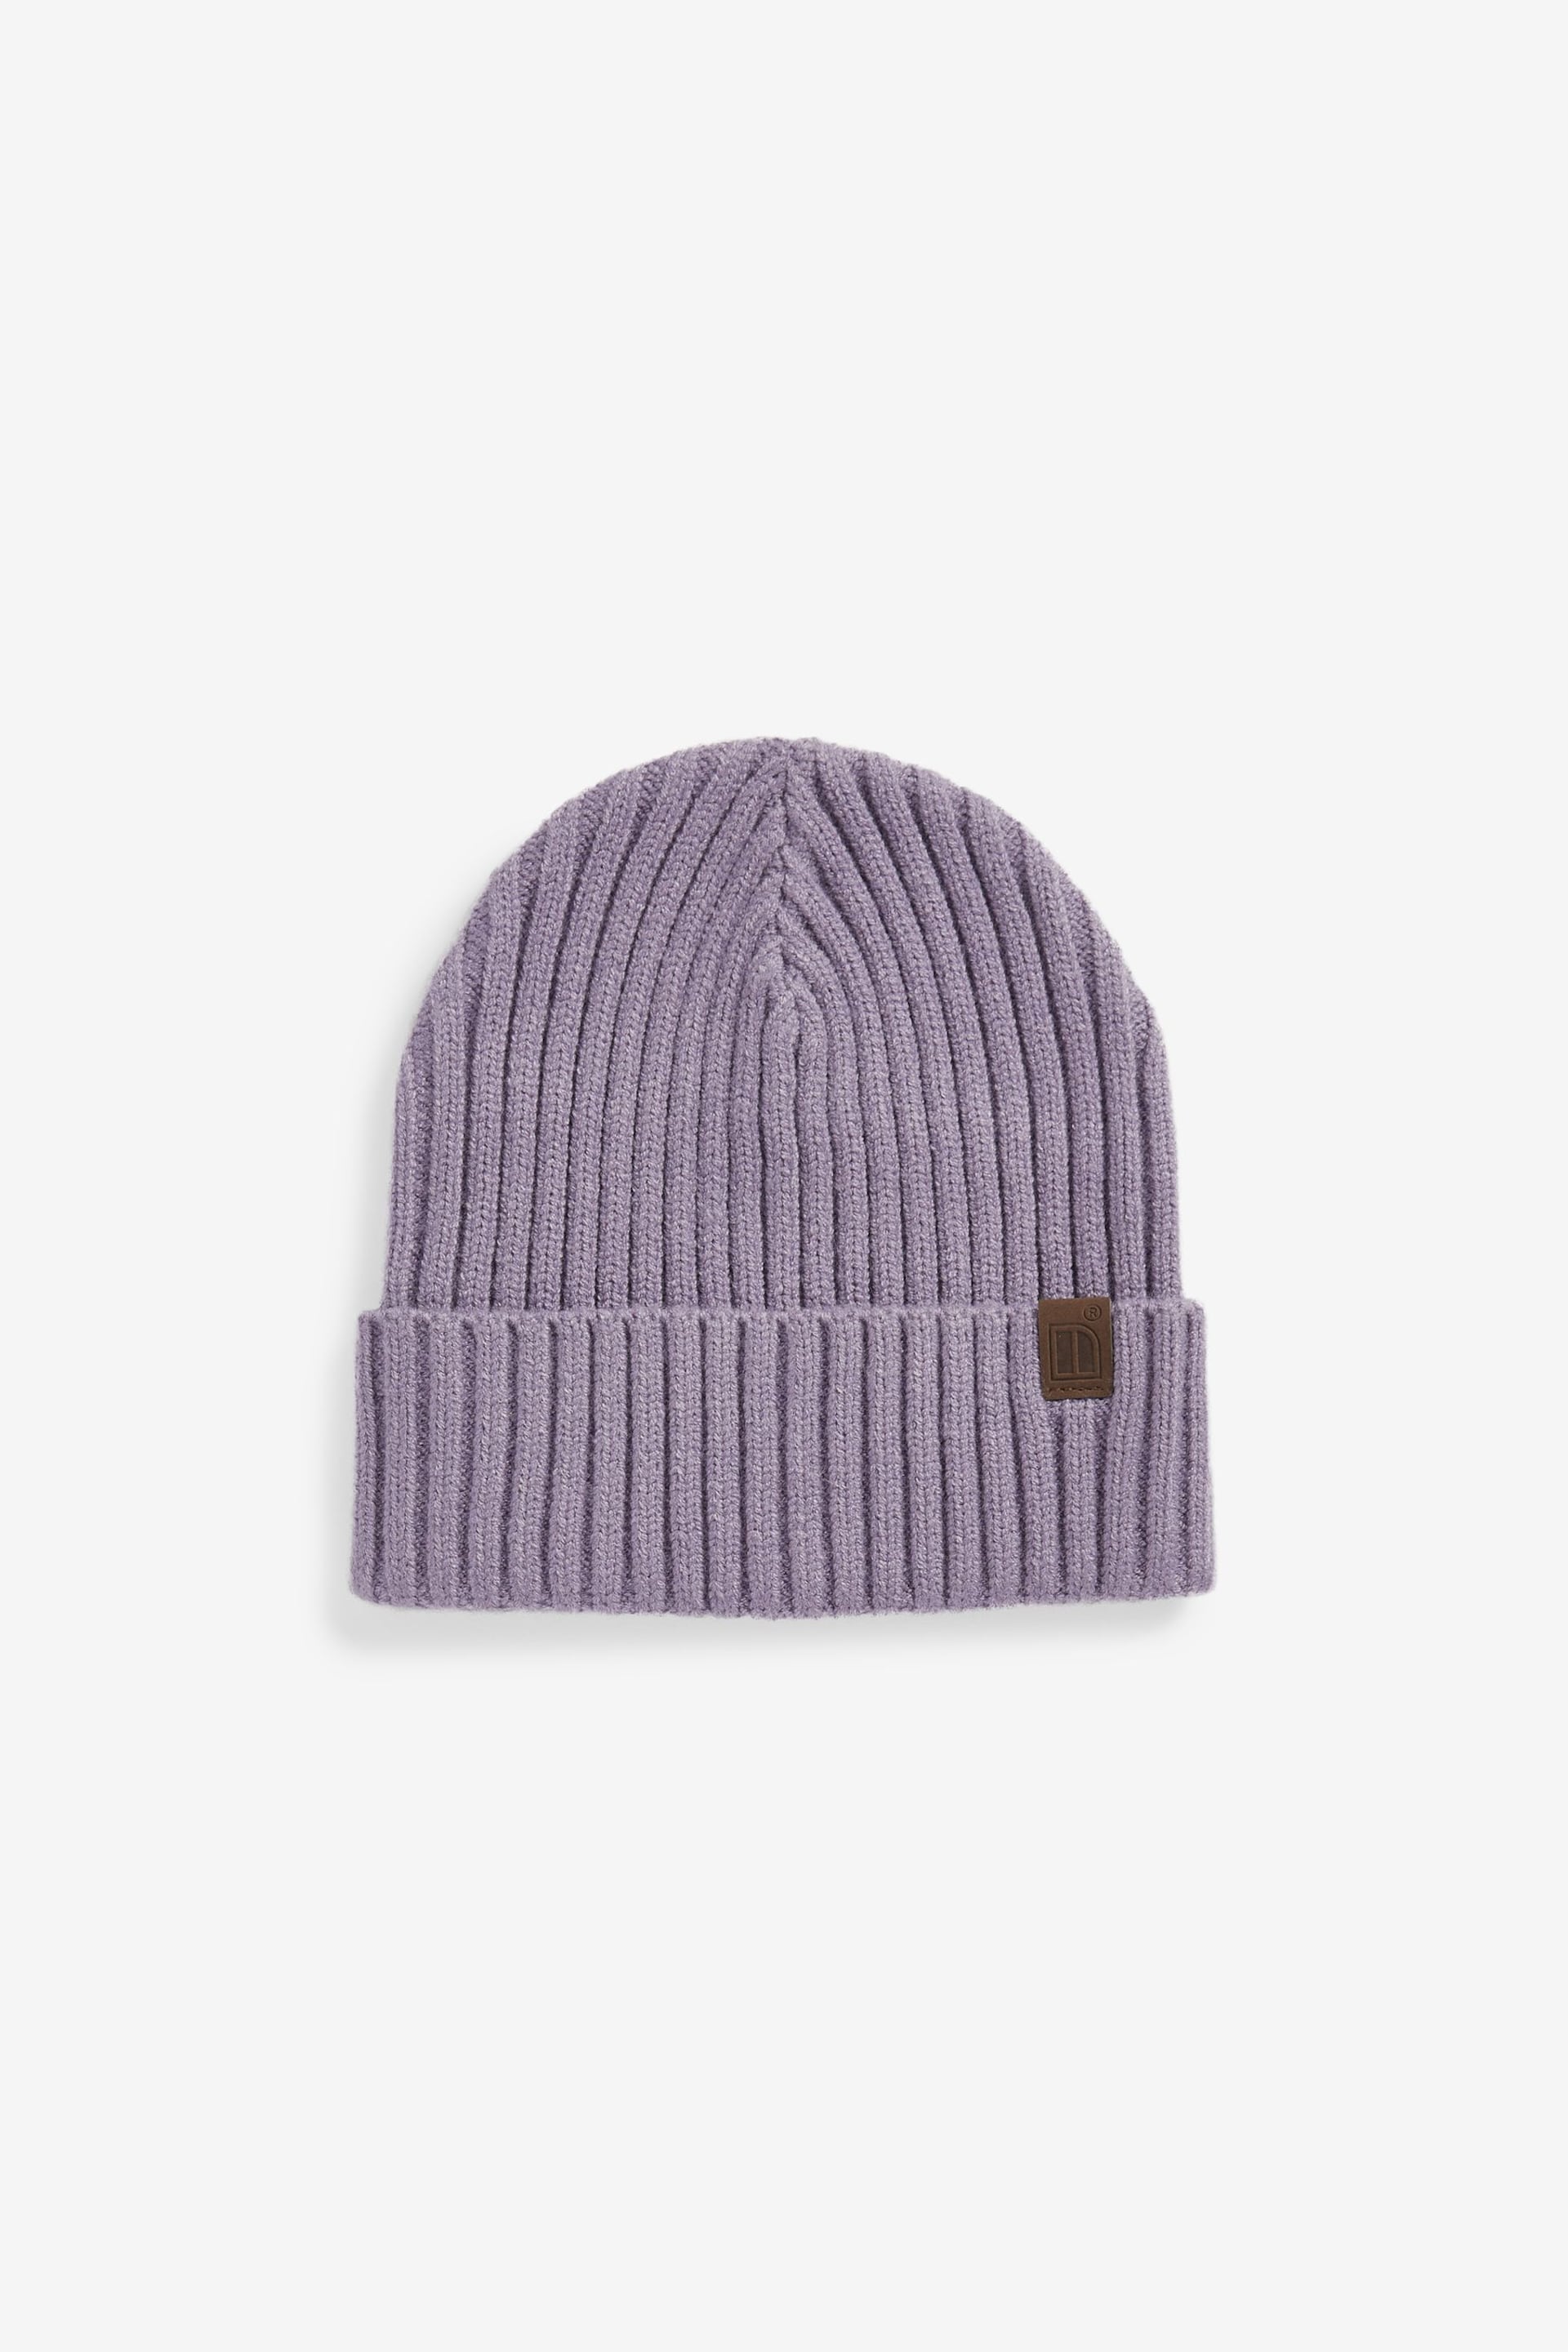 Mauve Purple Knitted Rib Beanie Hat (1-16yrs) - Image 1 of 2